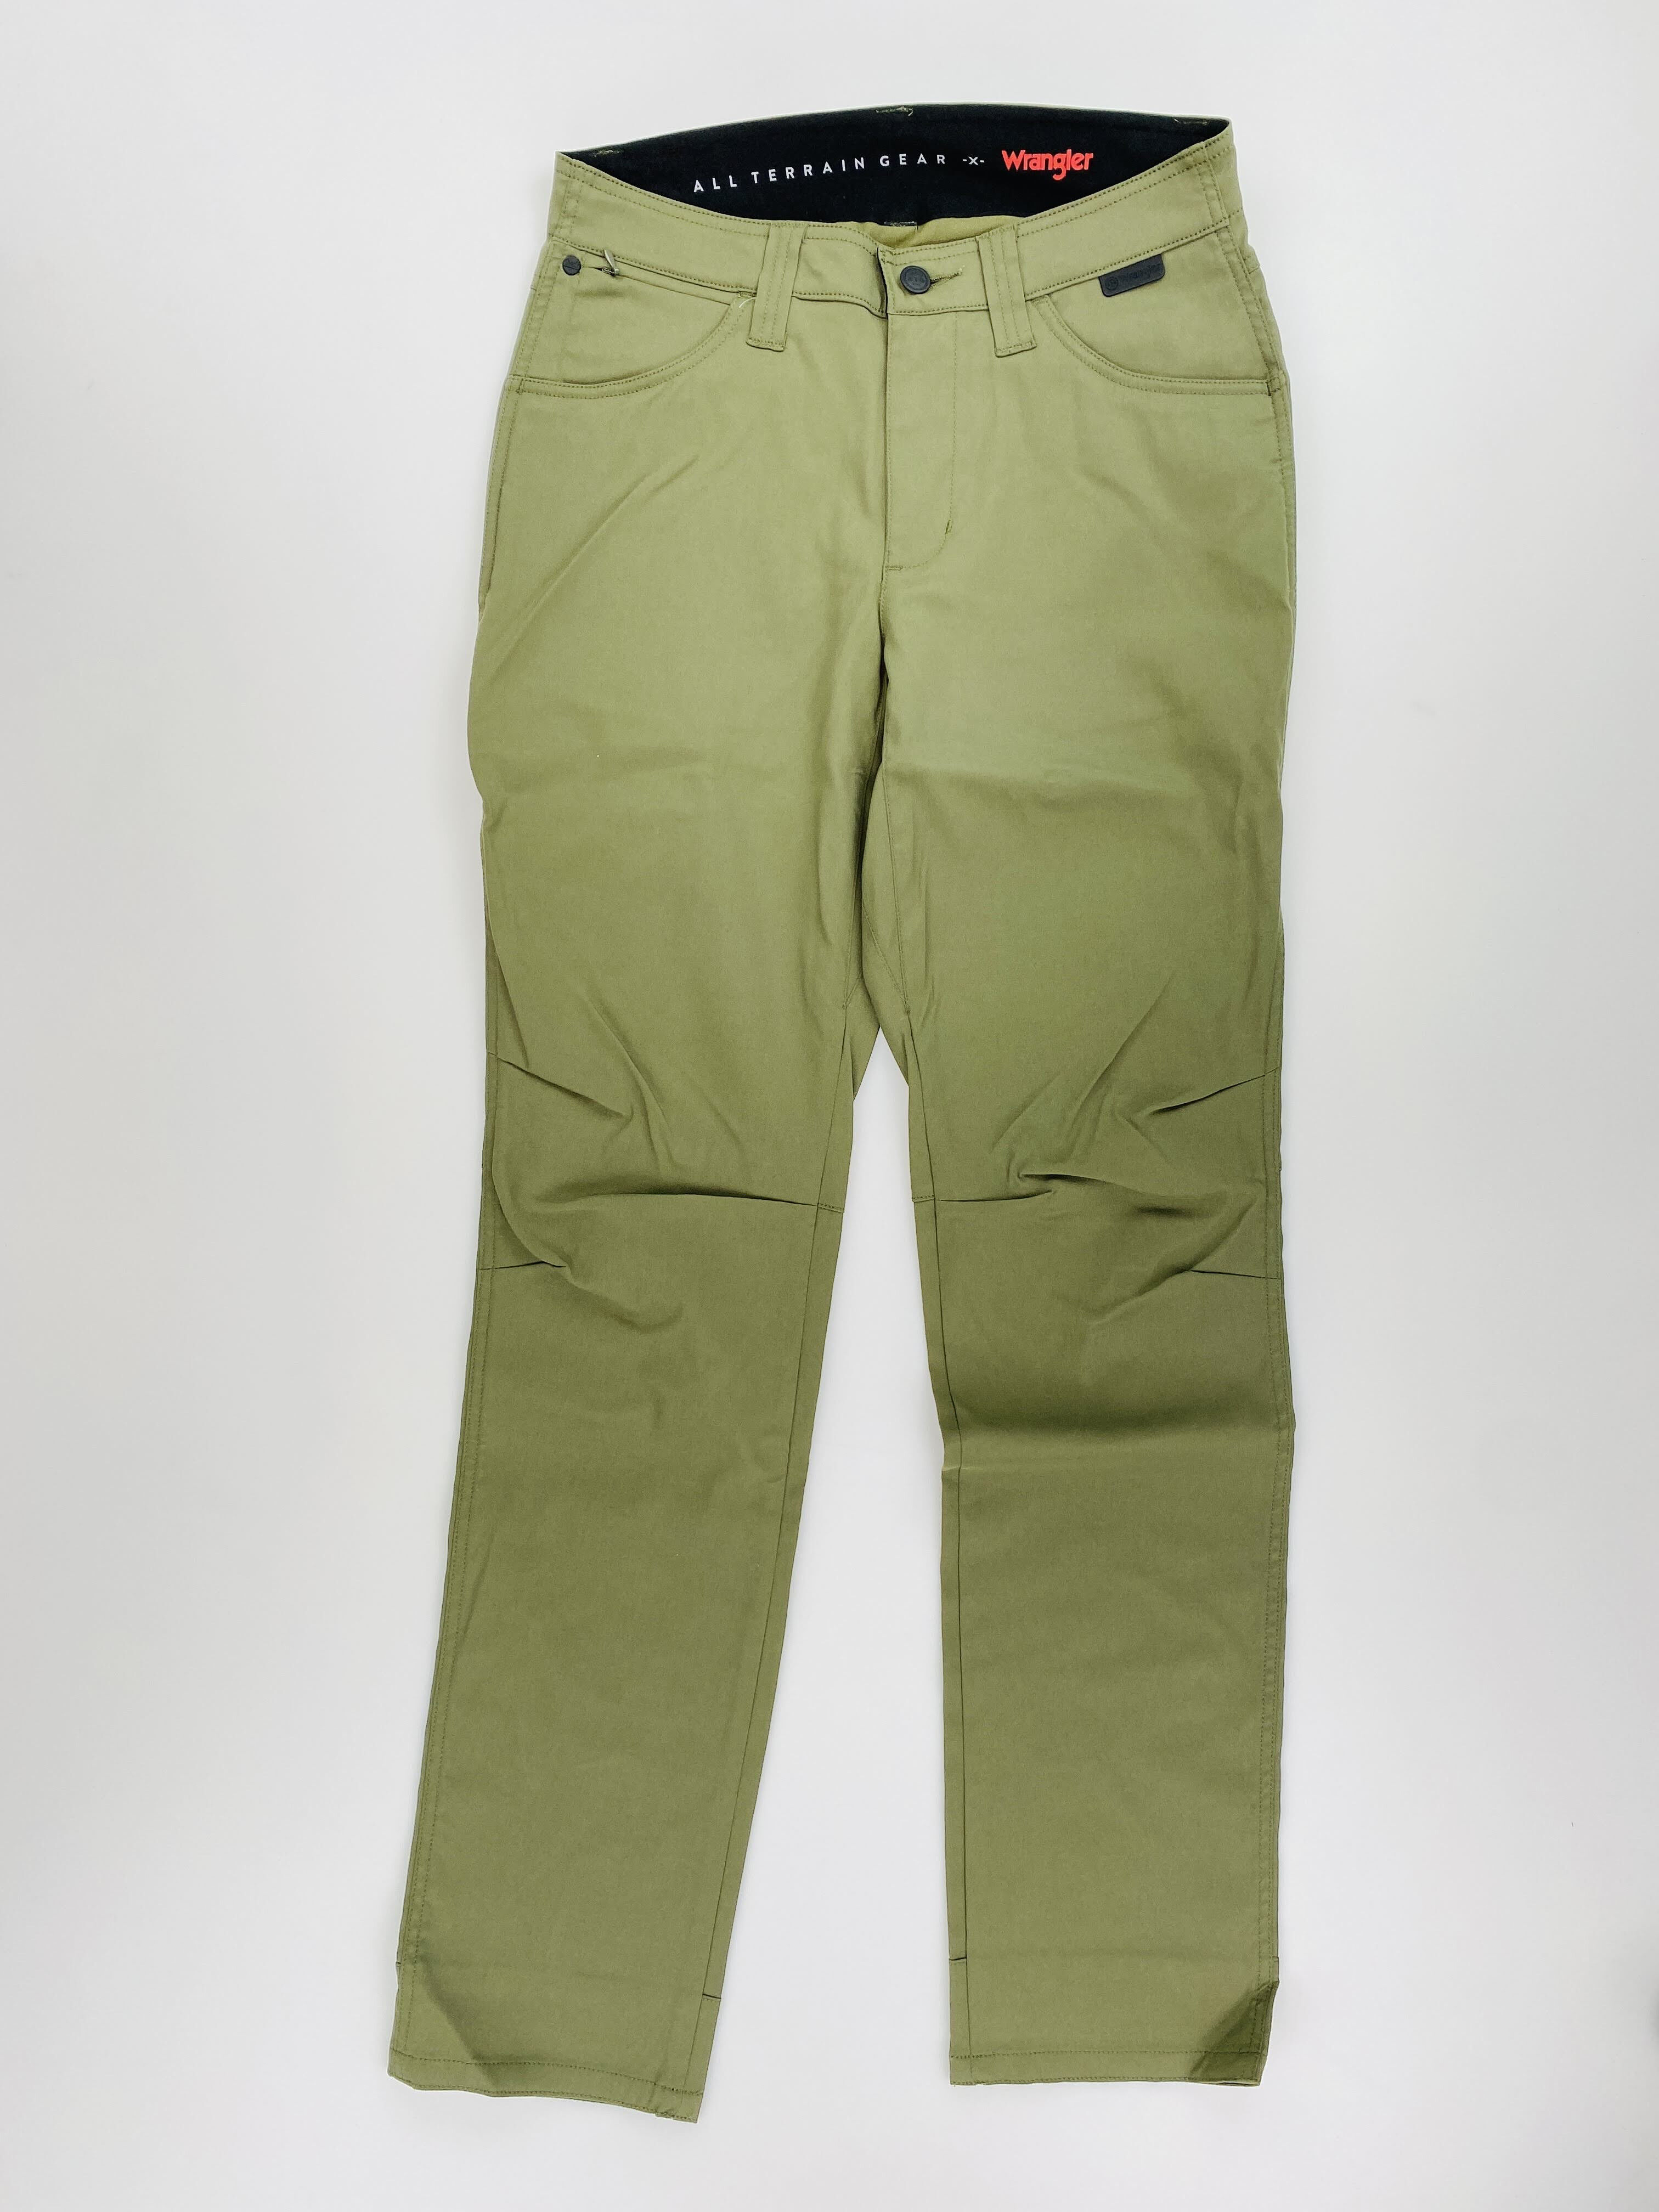 Wrangler Slim Utility Pants - Second Hand Walking trousers - Women's -  Olive green - US 28 | Hardloop